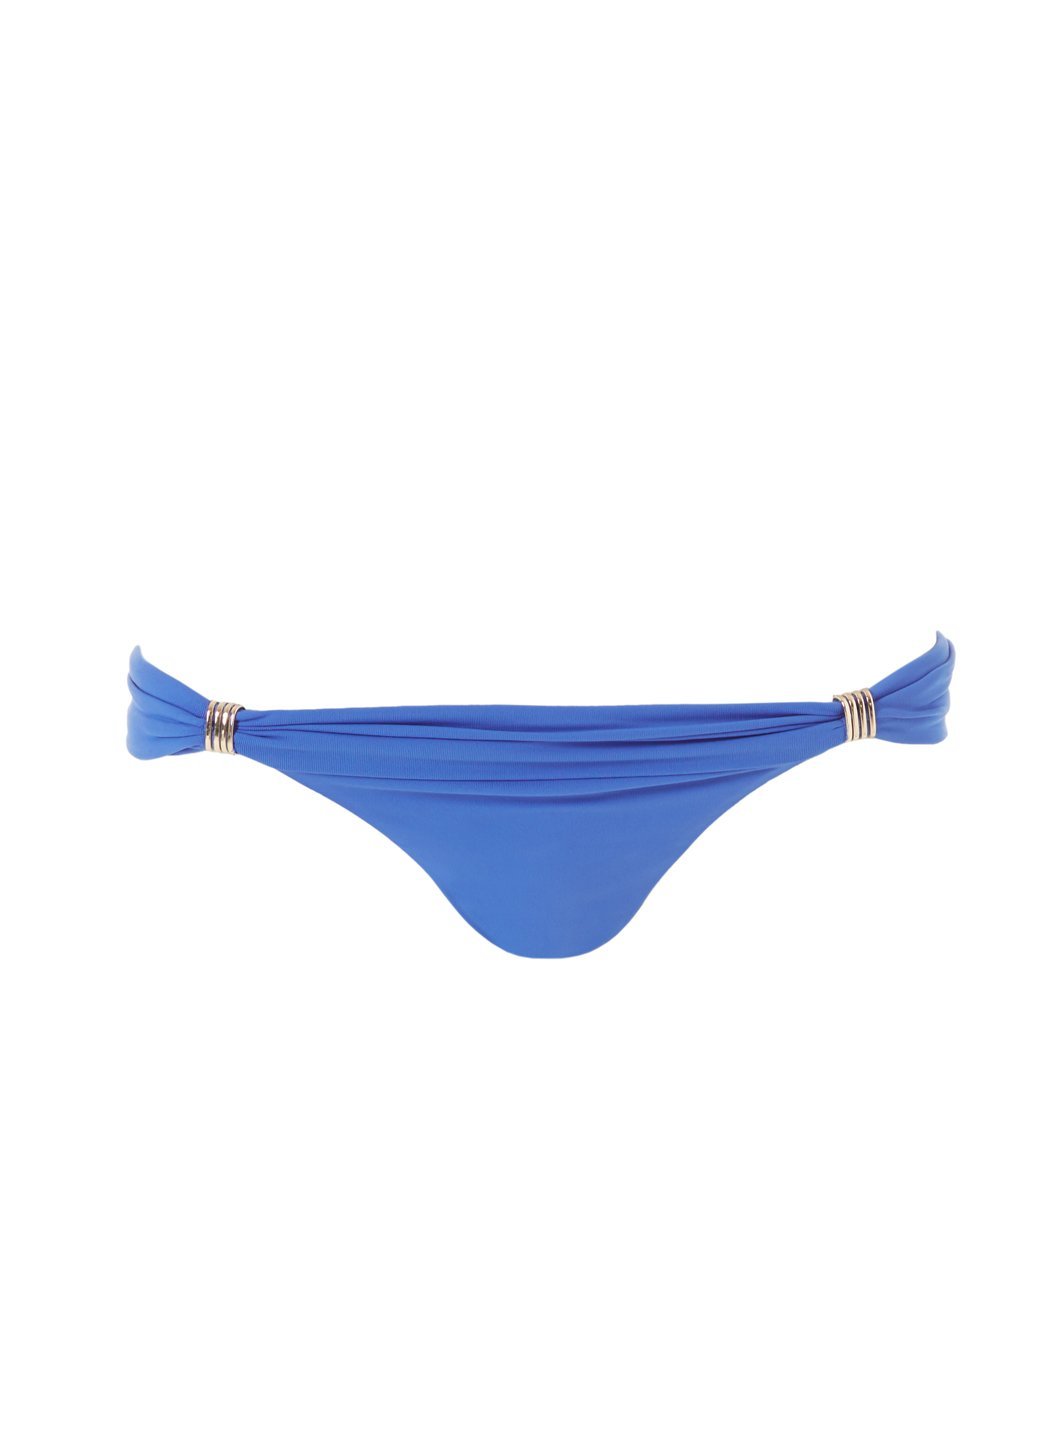 Grenada Royal Blue Bikini Bottom